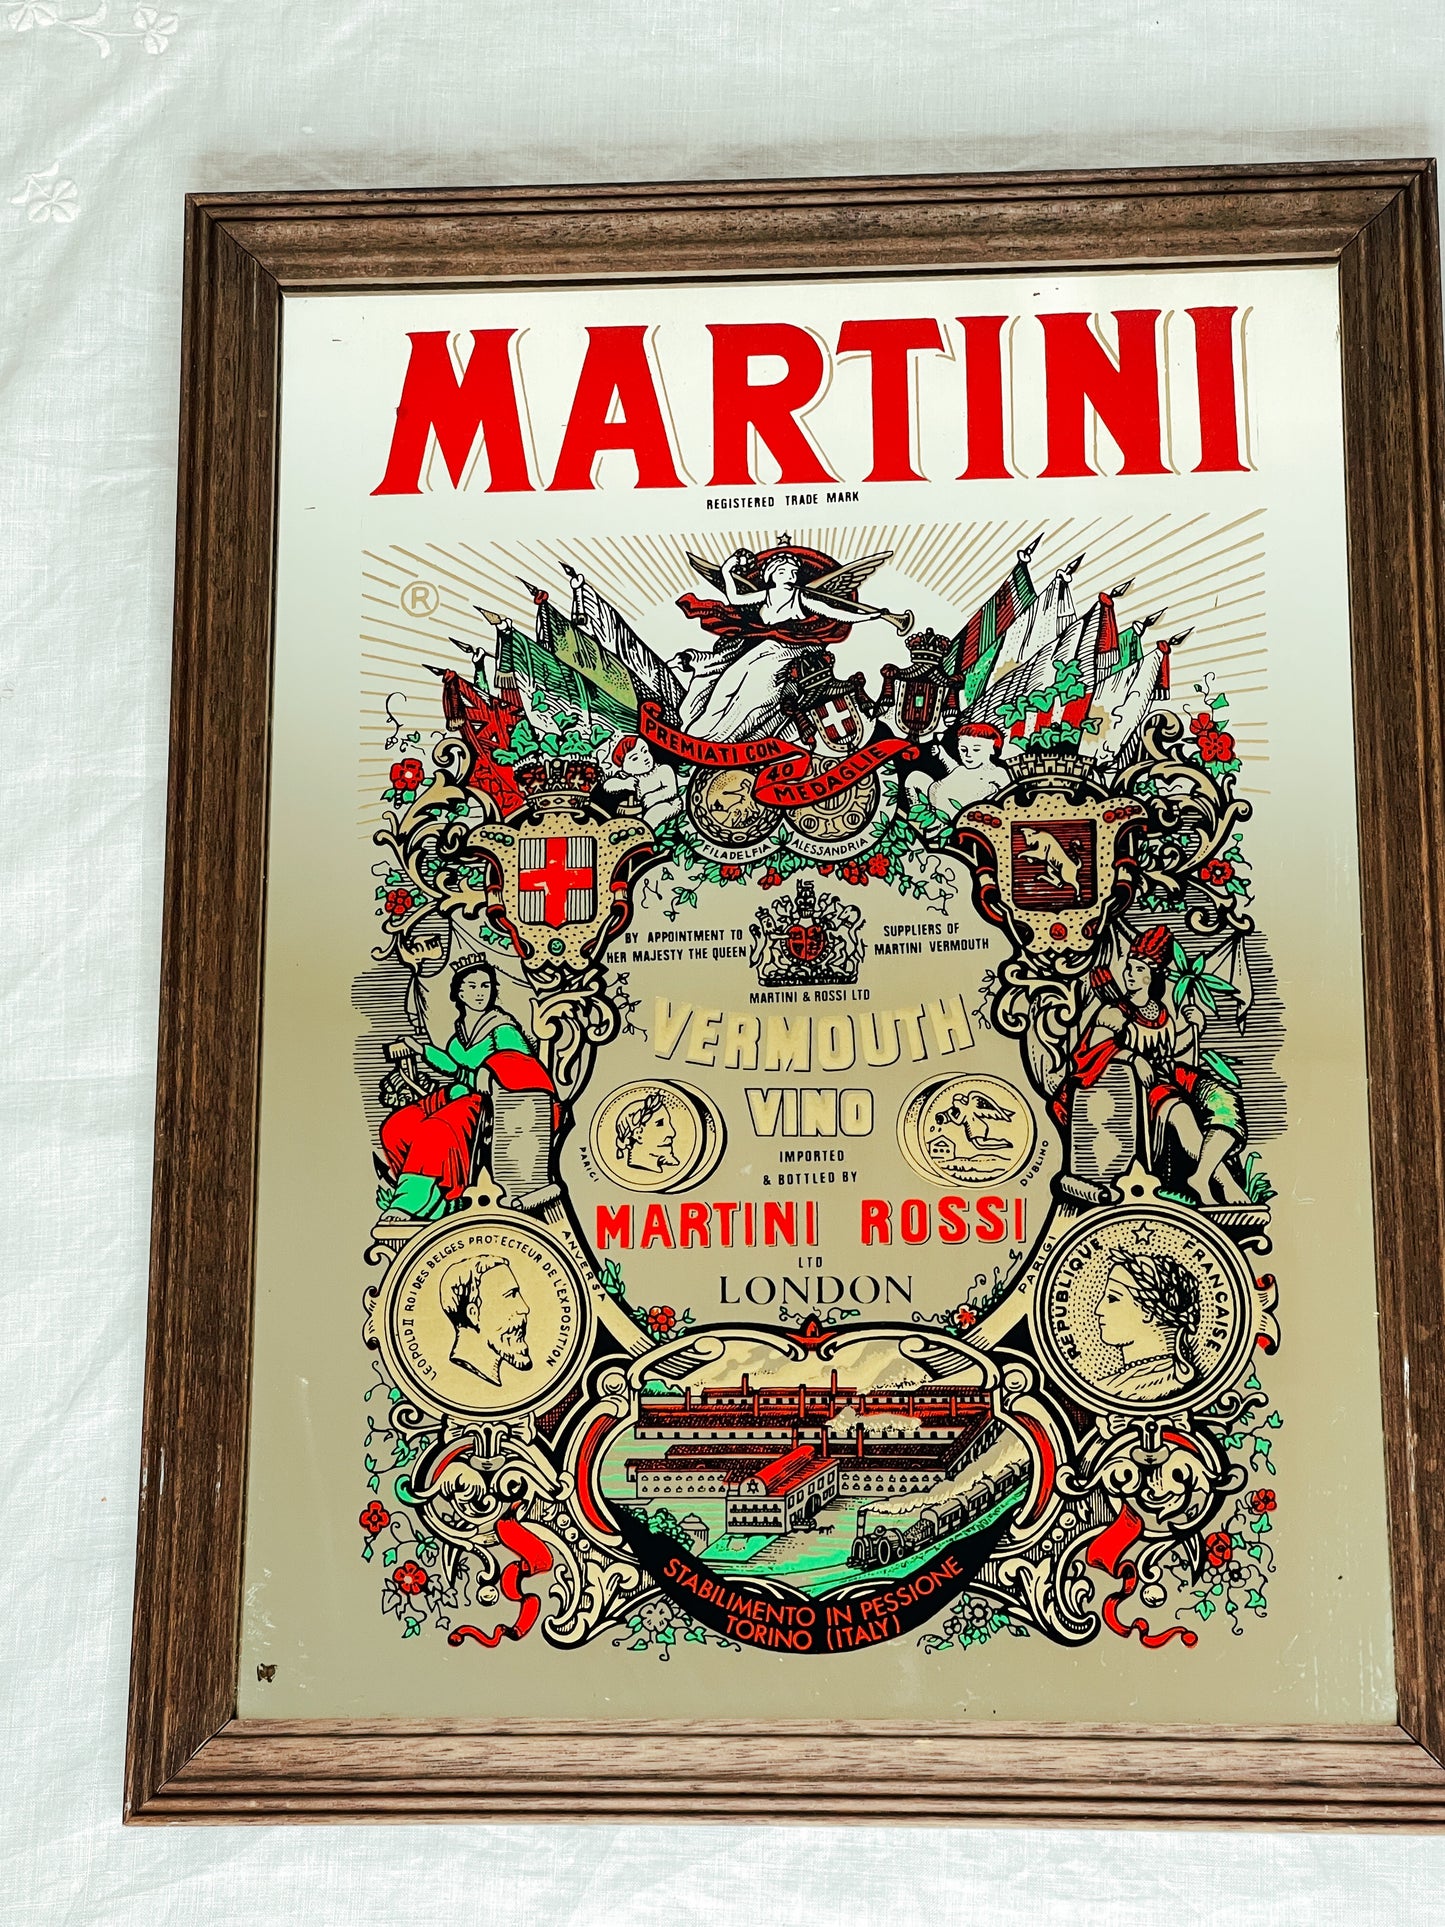 Martini Vermouth Vino advertising mirrored sign.